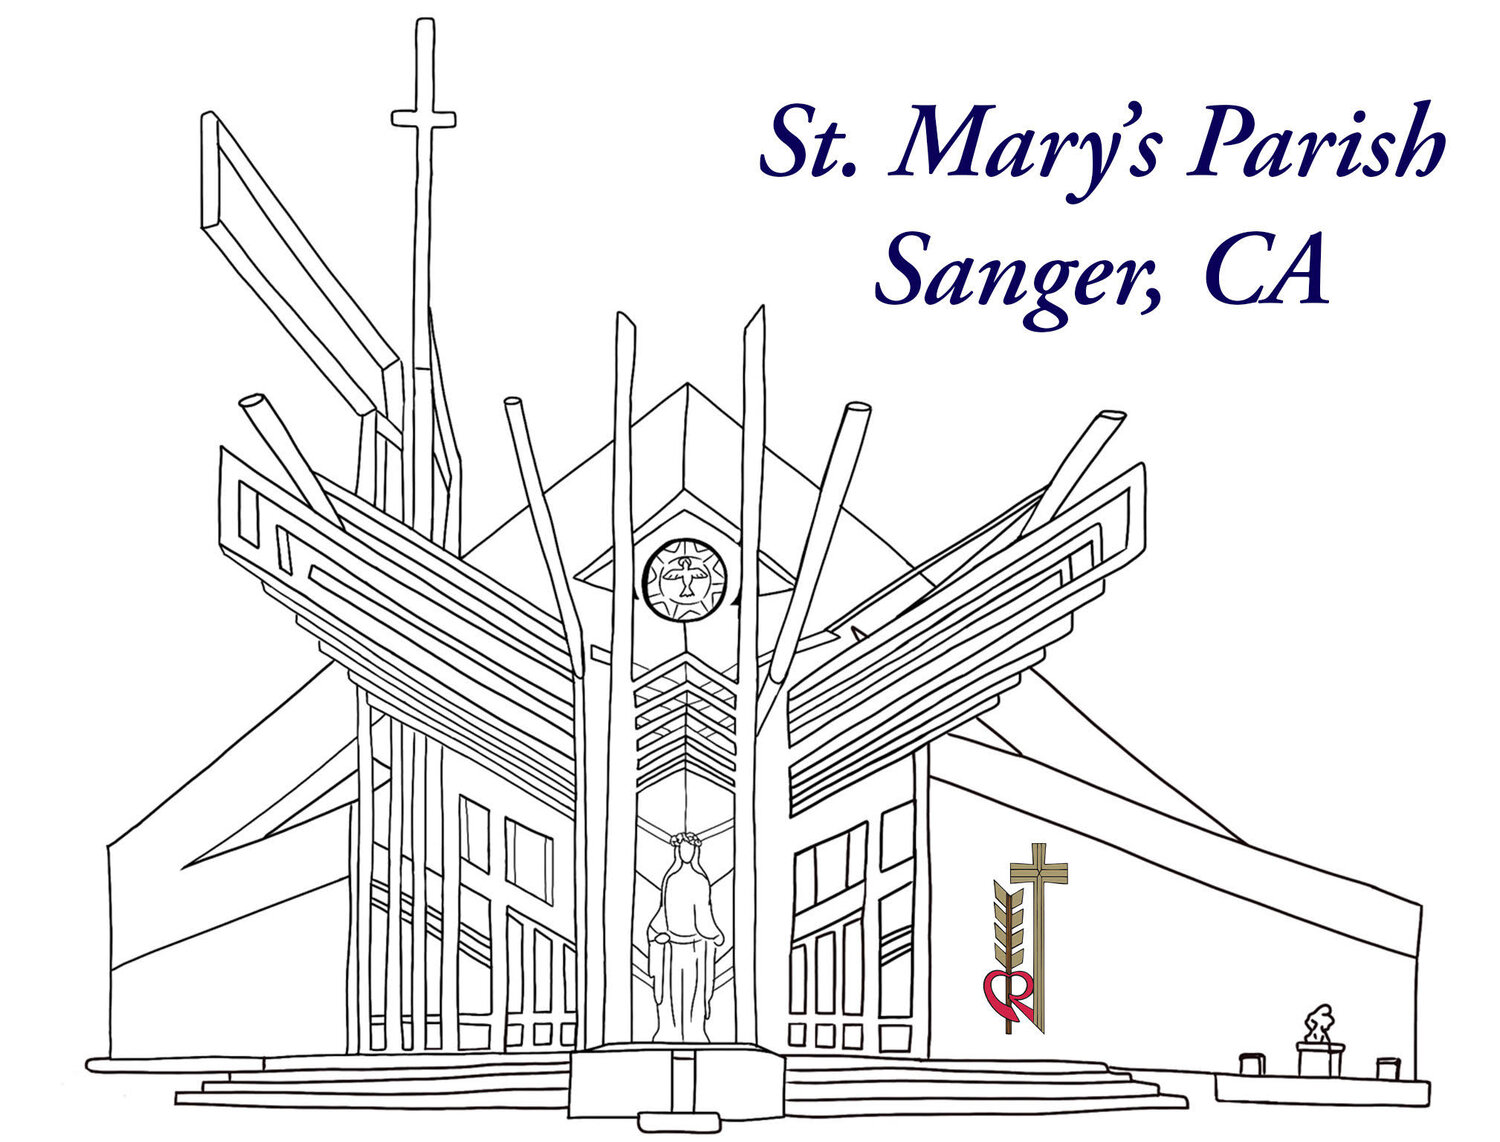 St. Mary's Parish [Sanger, CA]